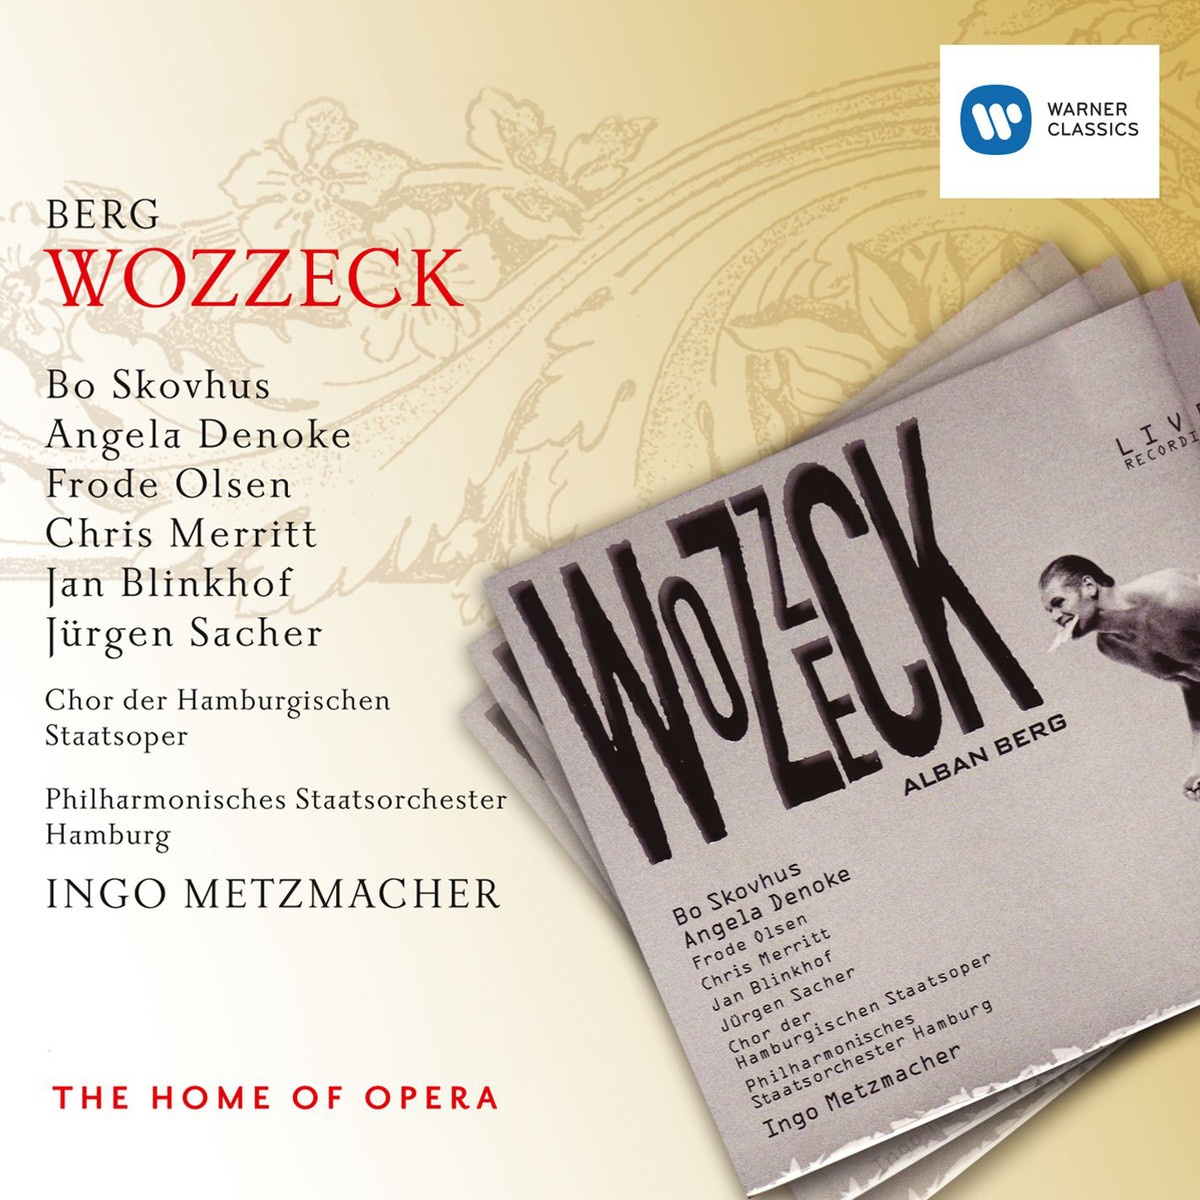 Wozzeck  Oper in 3 Akten, Erster Akt: Geh einmal vor dich hin ... 5. Szene: Marie  Tambourmajor